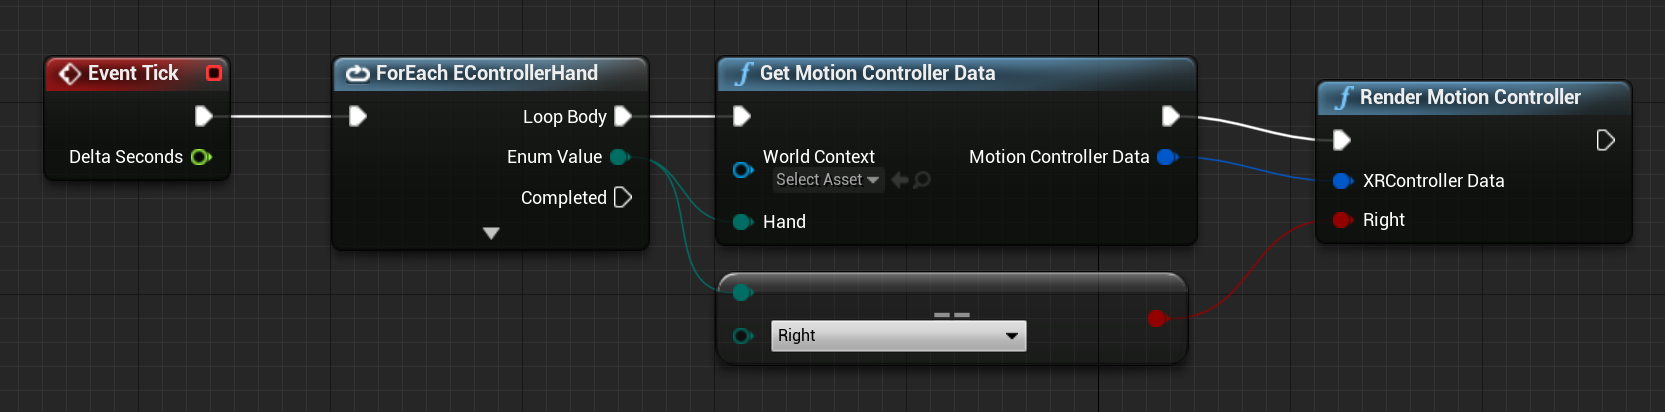 Podrobný plán funkce get motion controller data connected to render motion controller function